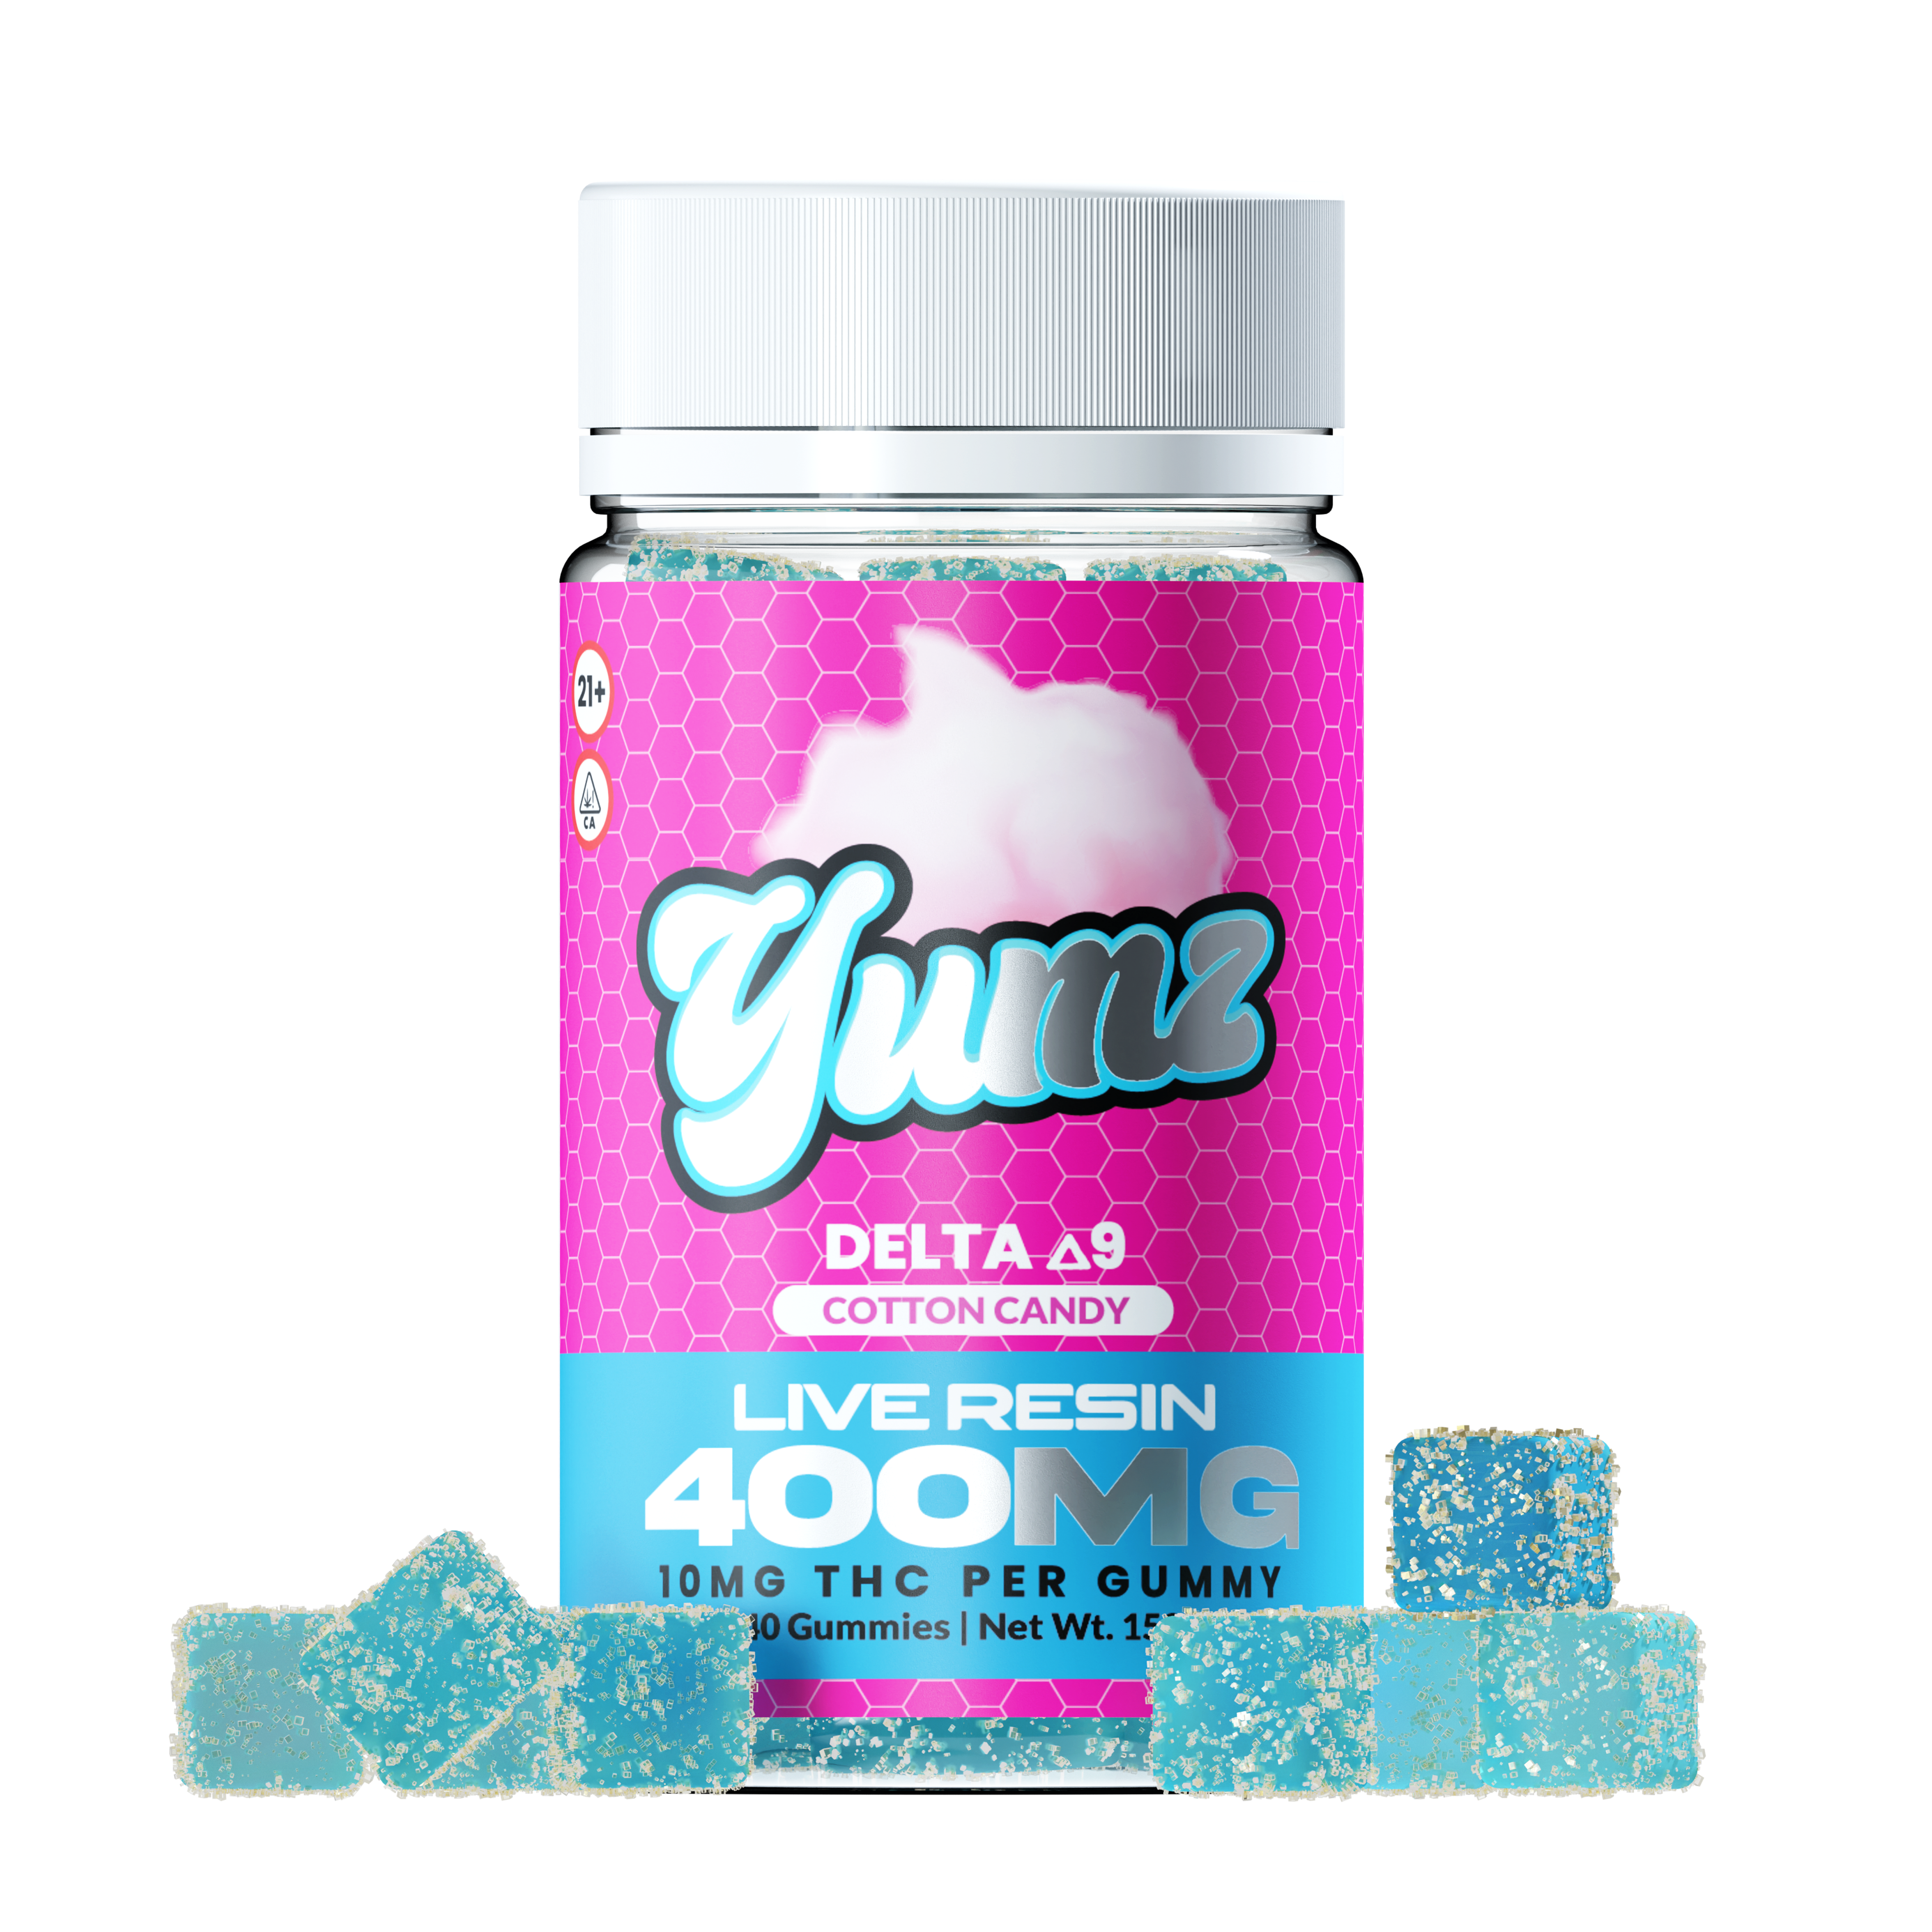 Yumz Lab - Delta 9 - Live Resin - THC Gummies - Cotton Candy - 400MG - Farm Bill Compliant - 40 Gummies (10MG THC Each)